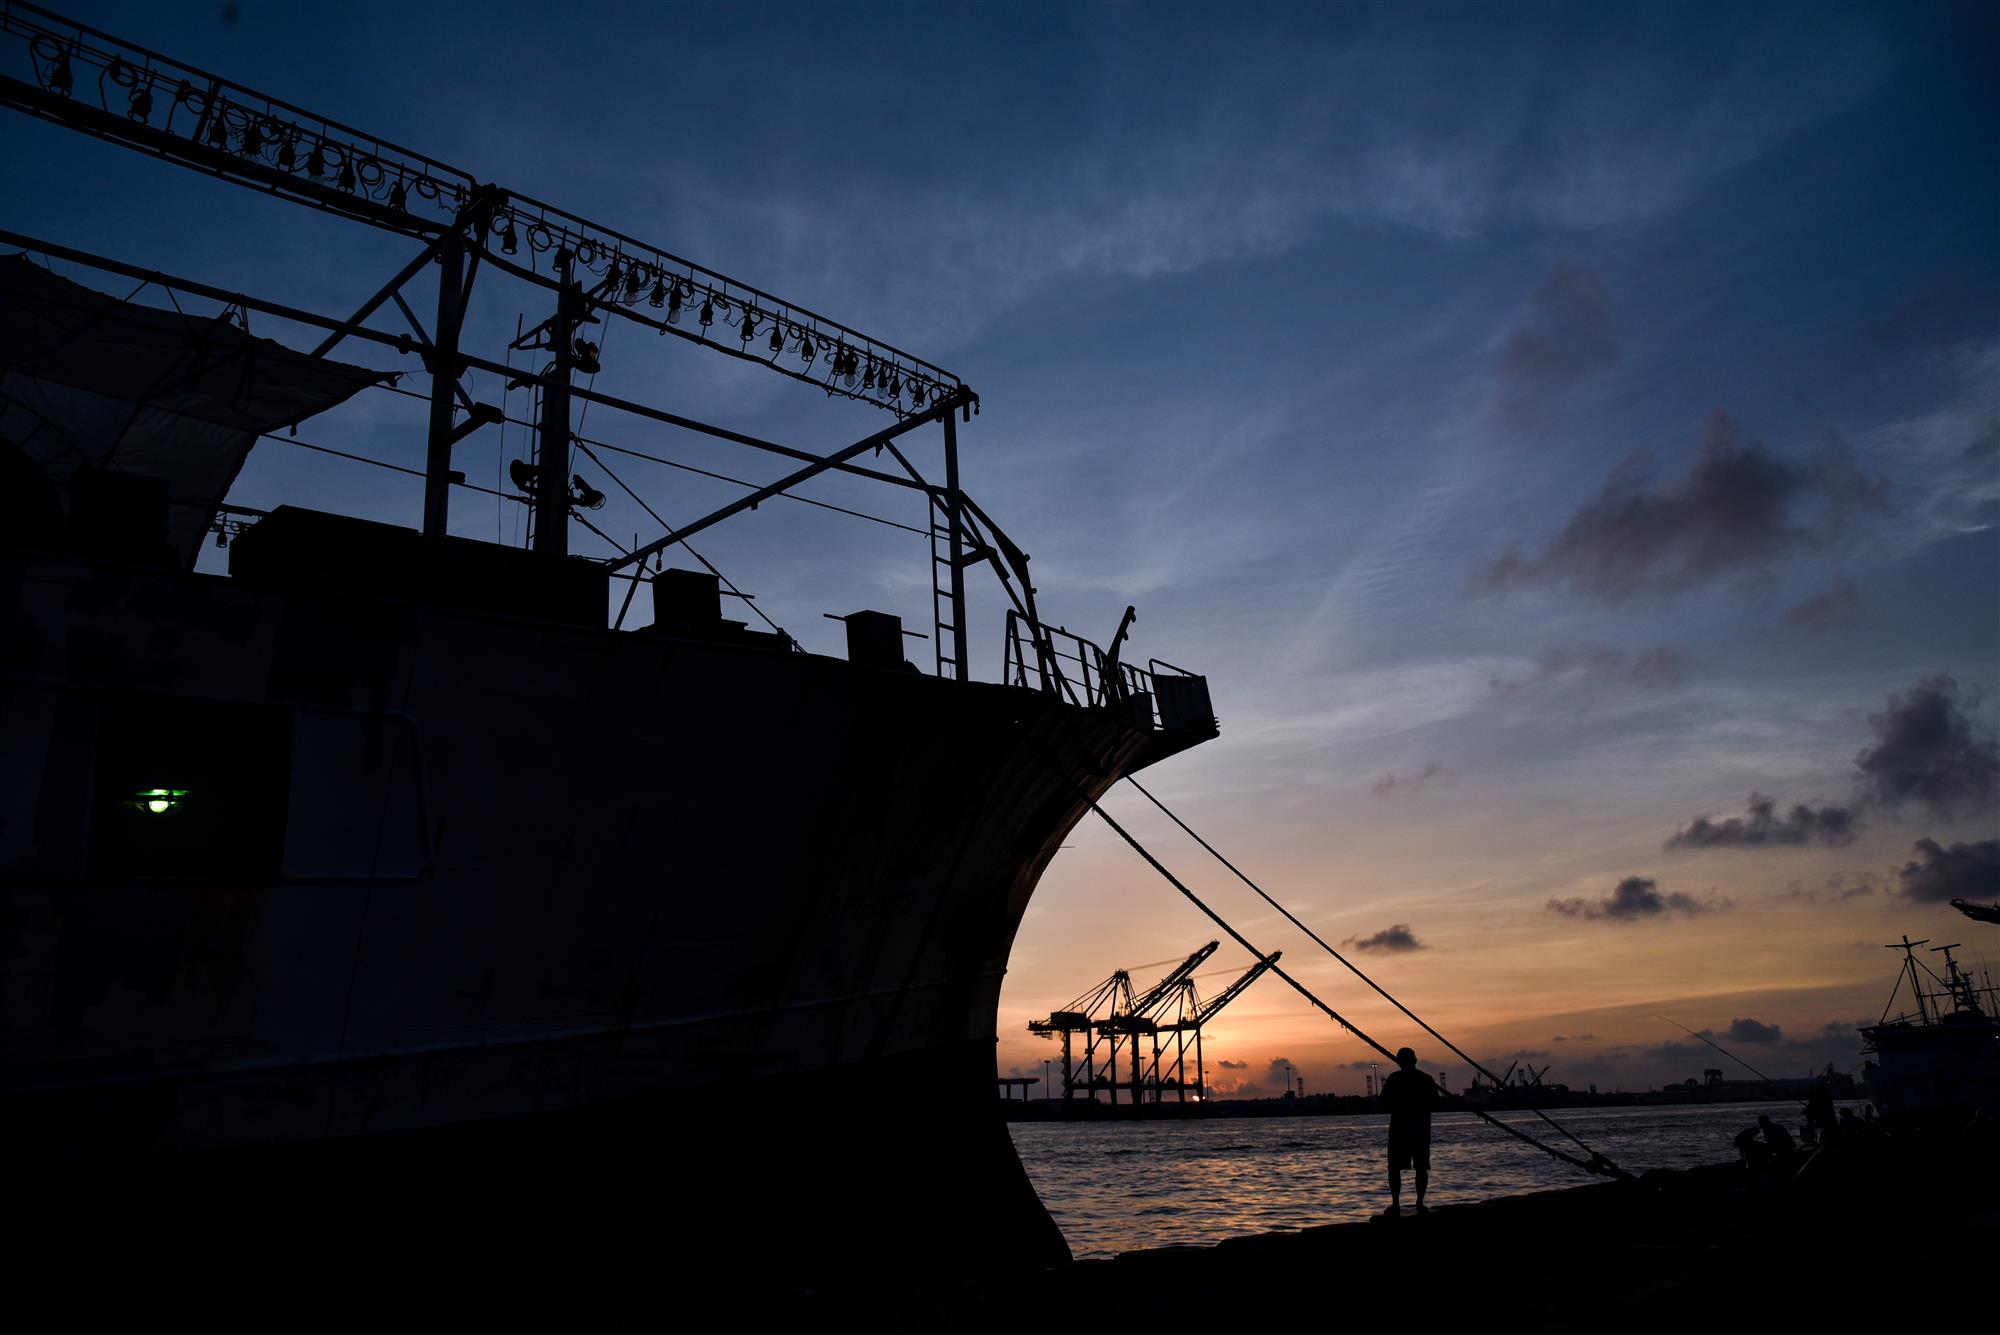 Self Photos / Files - silhouette-of-ship-docked-1079946